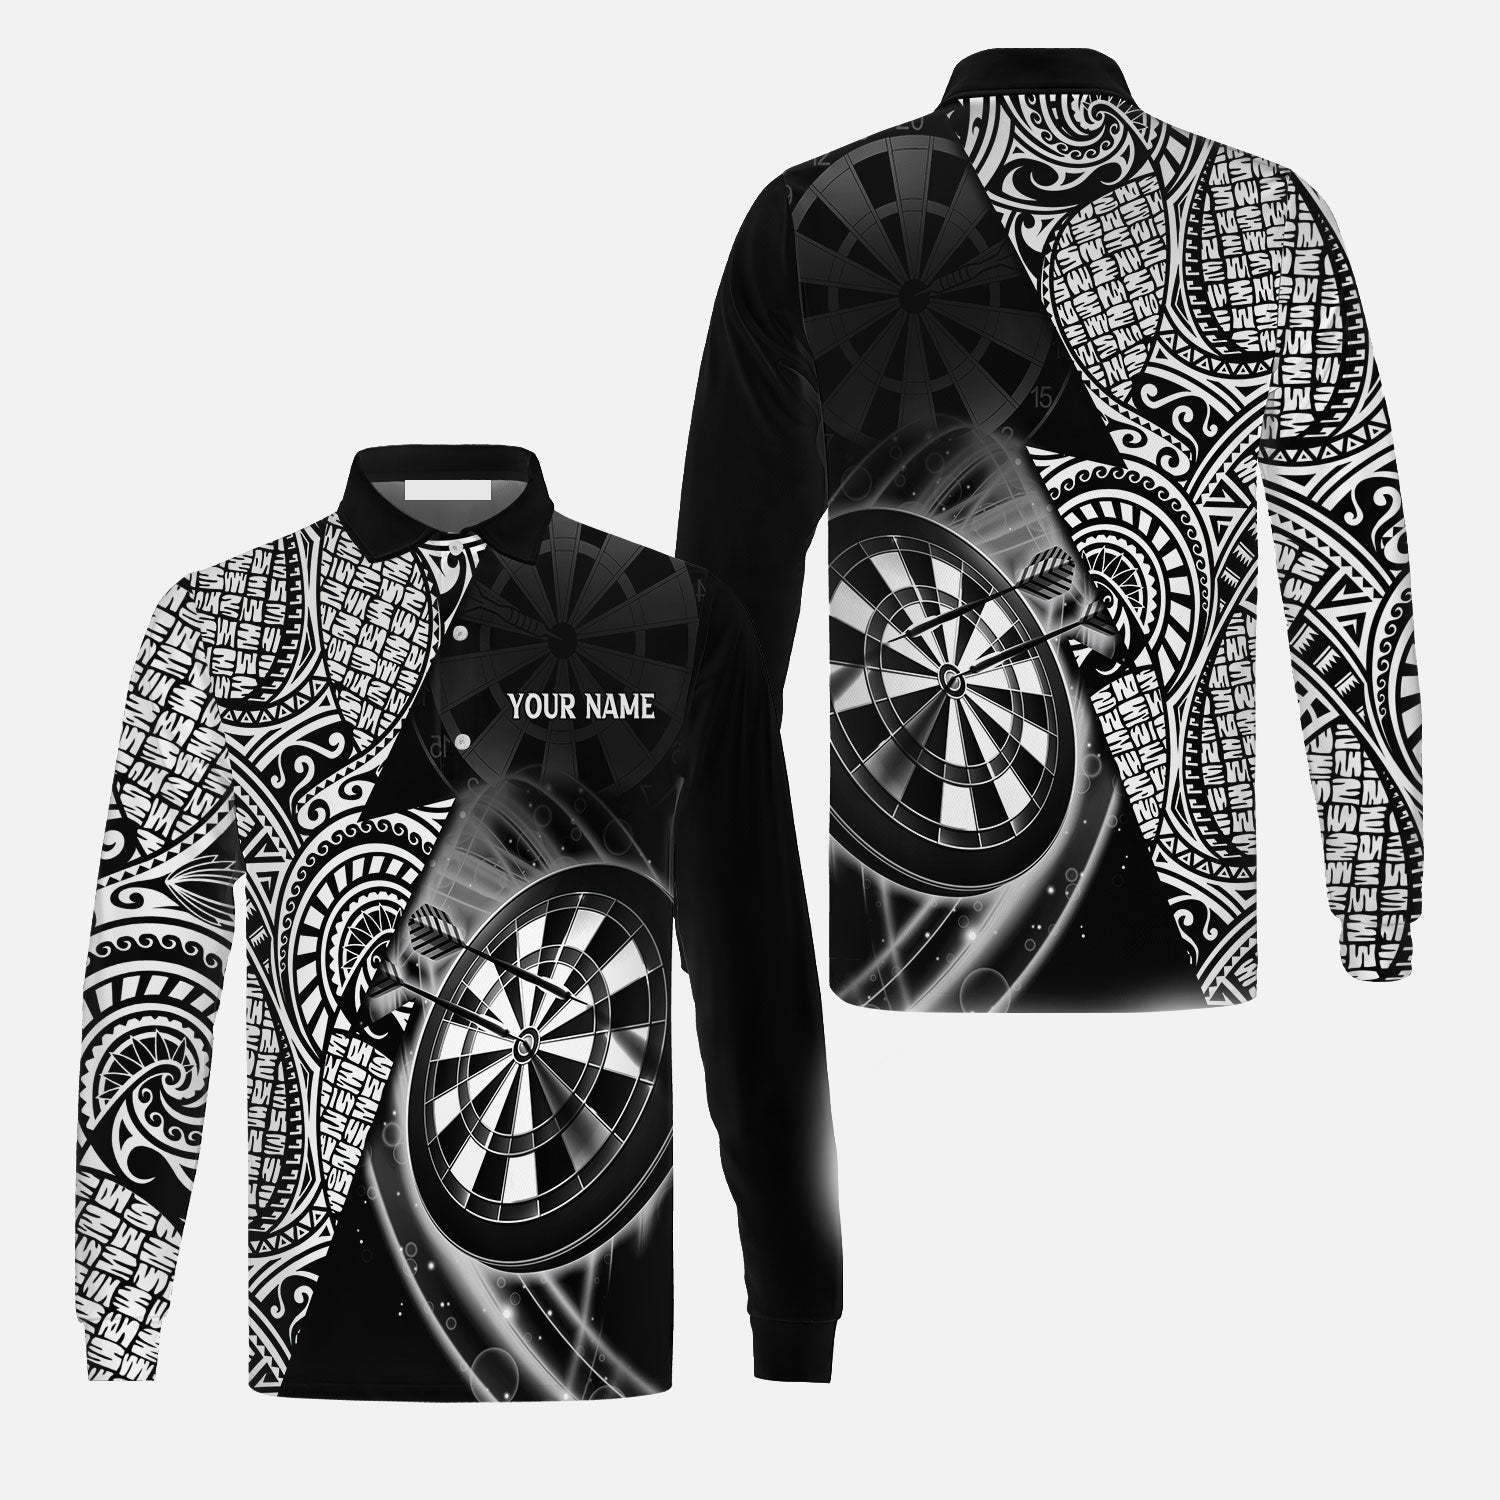 Customized Darts Men''s Long Sleeve Polo Shirt/ Black & White Tattoo Darts/ Gift for Dart Lovers